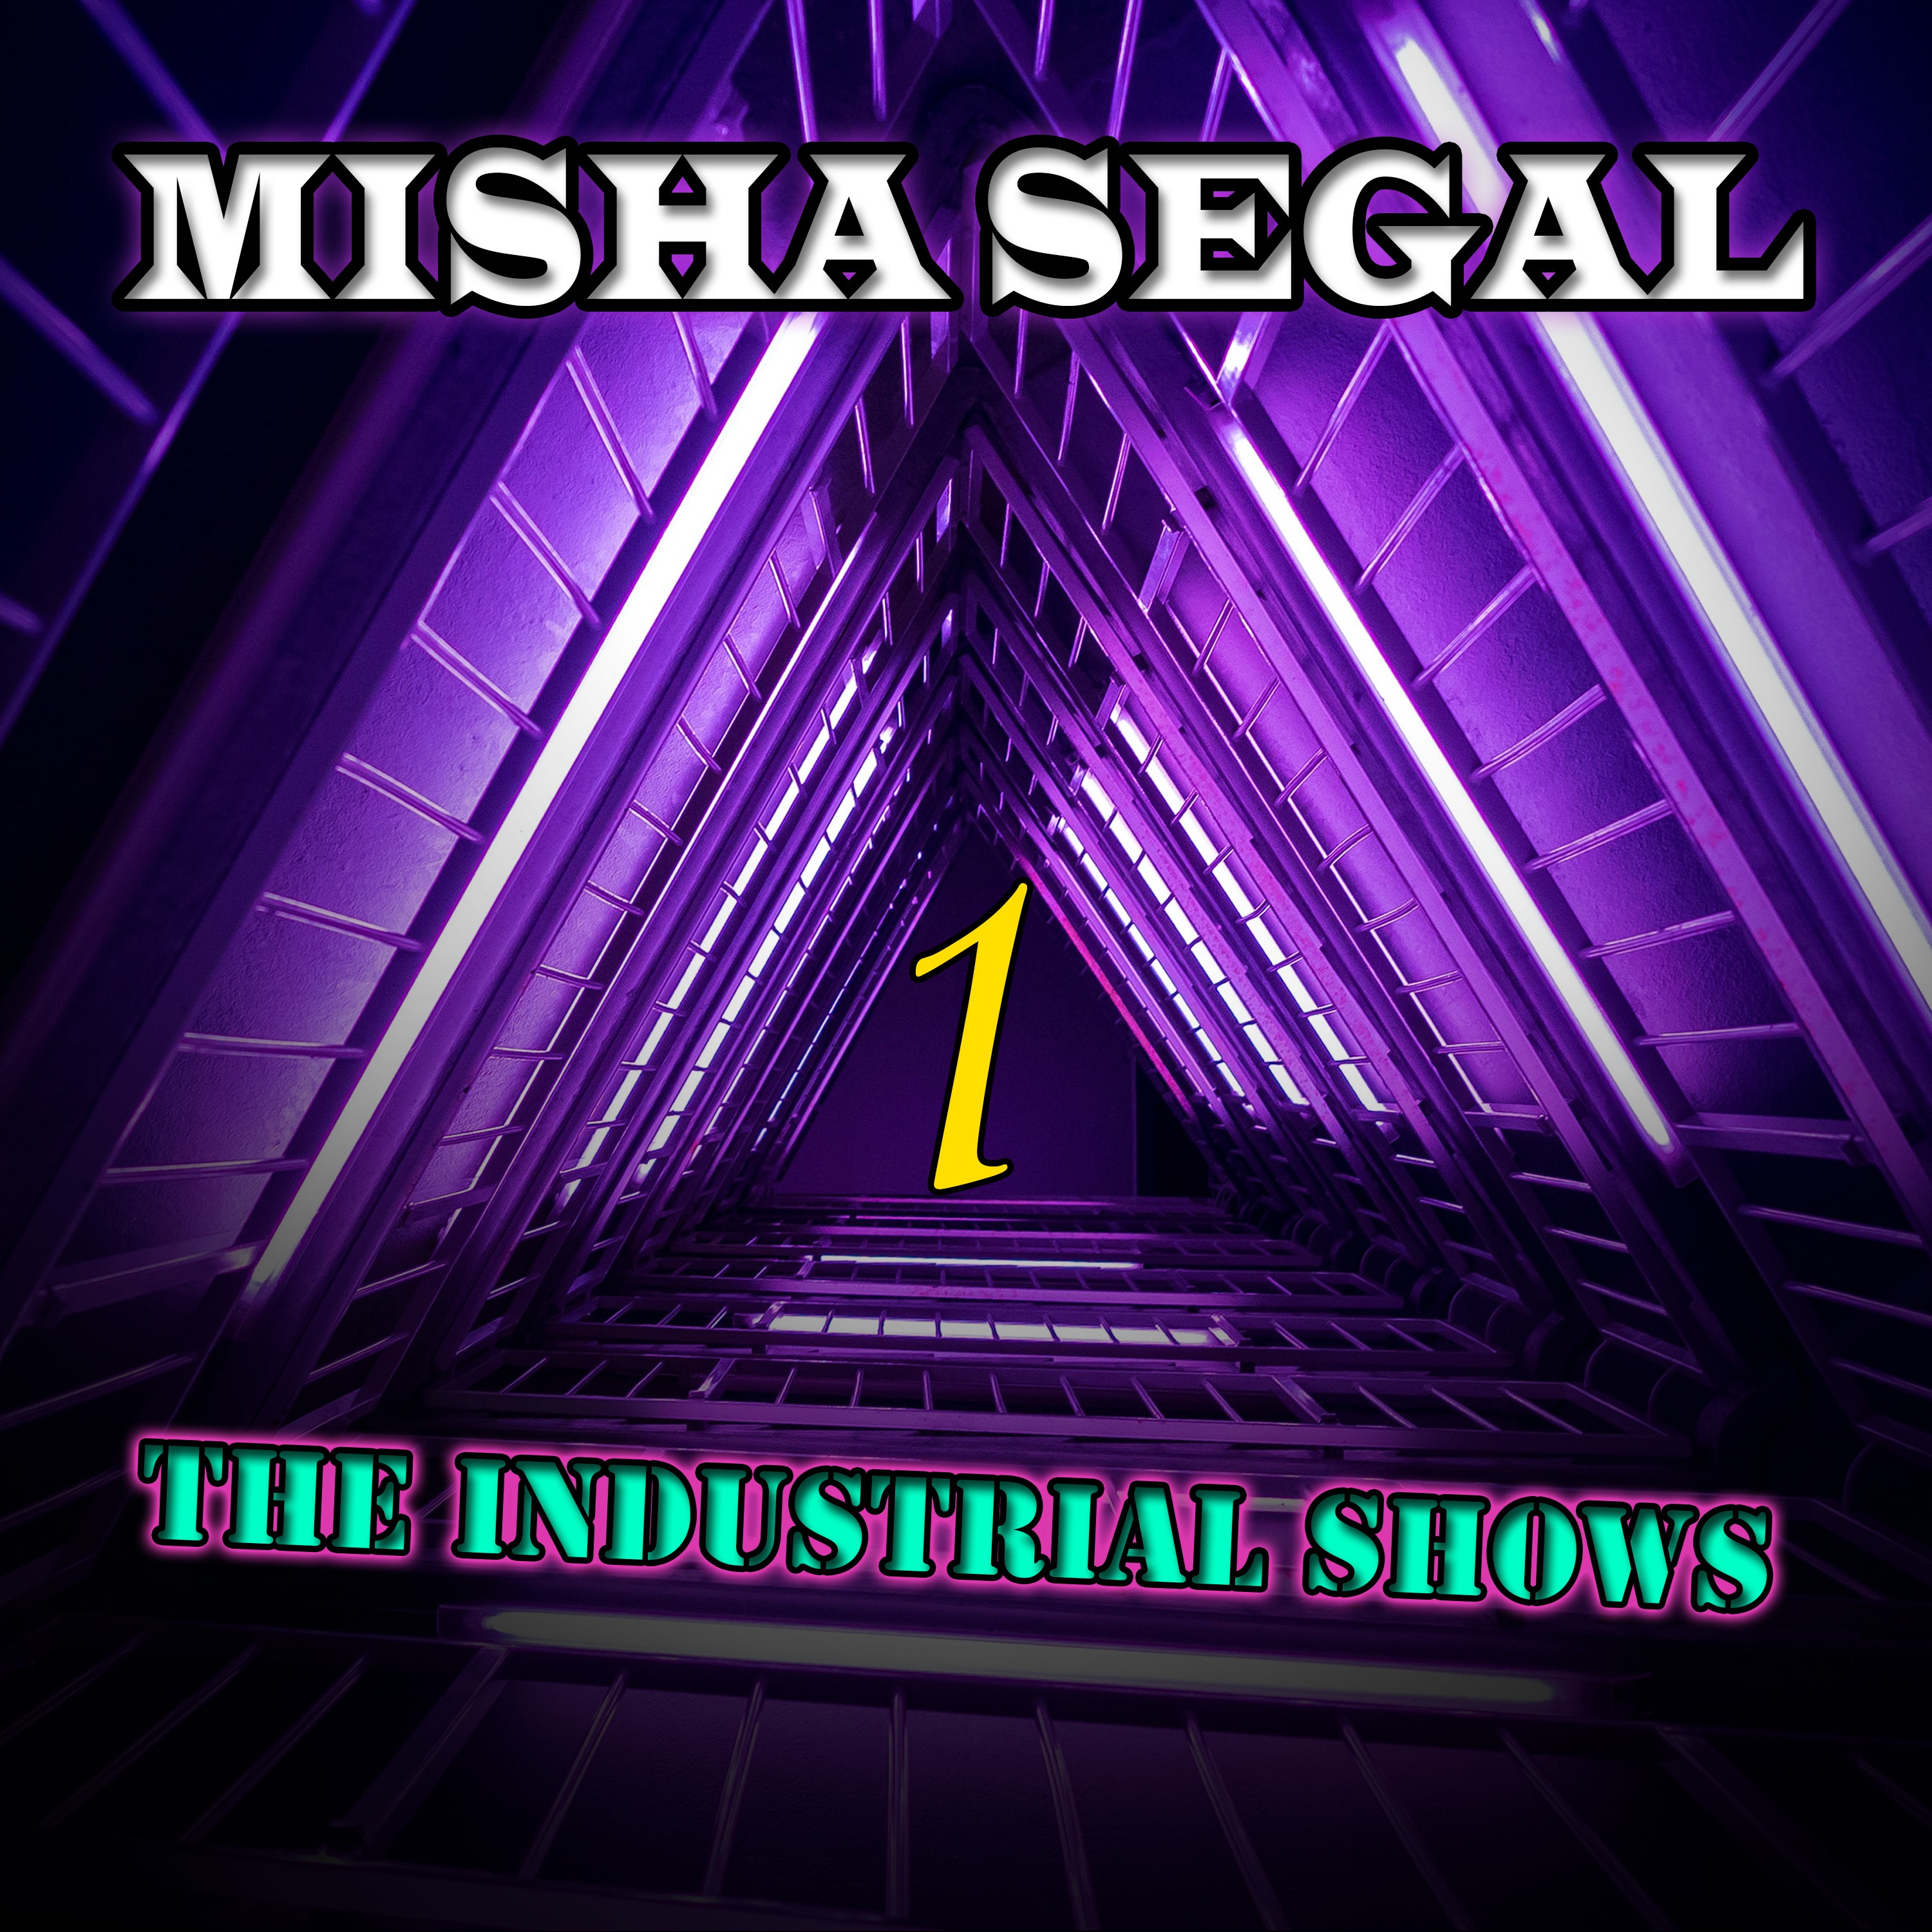 Misha Segal. MISHBY (Freakshow industries). Show volume